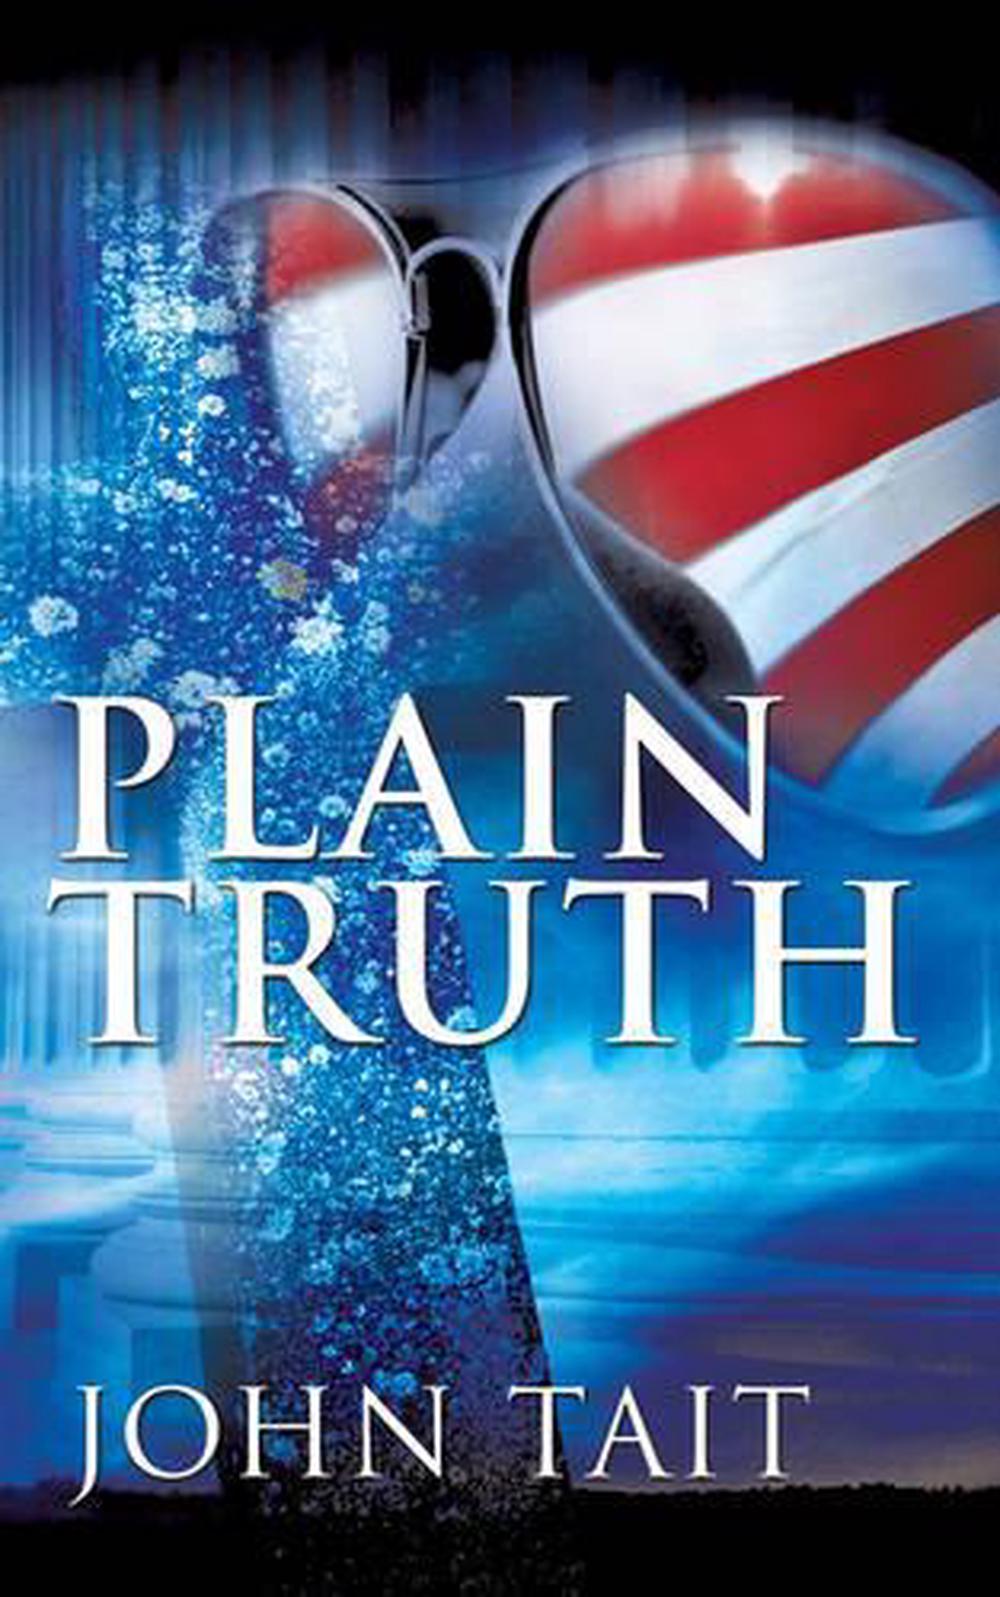 the plain truth book